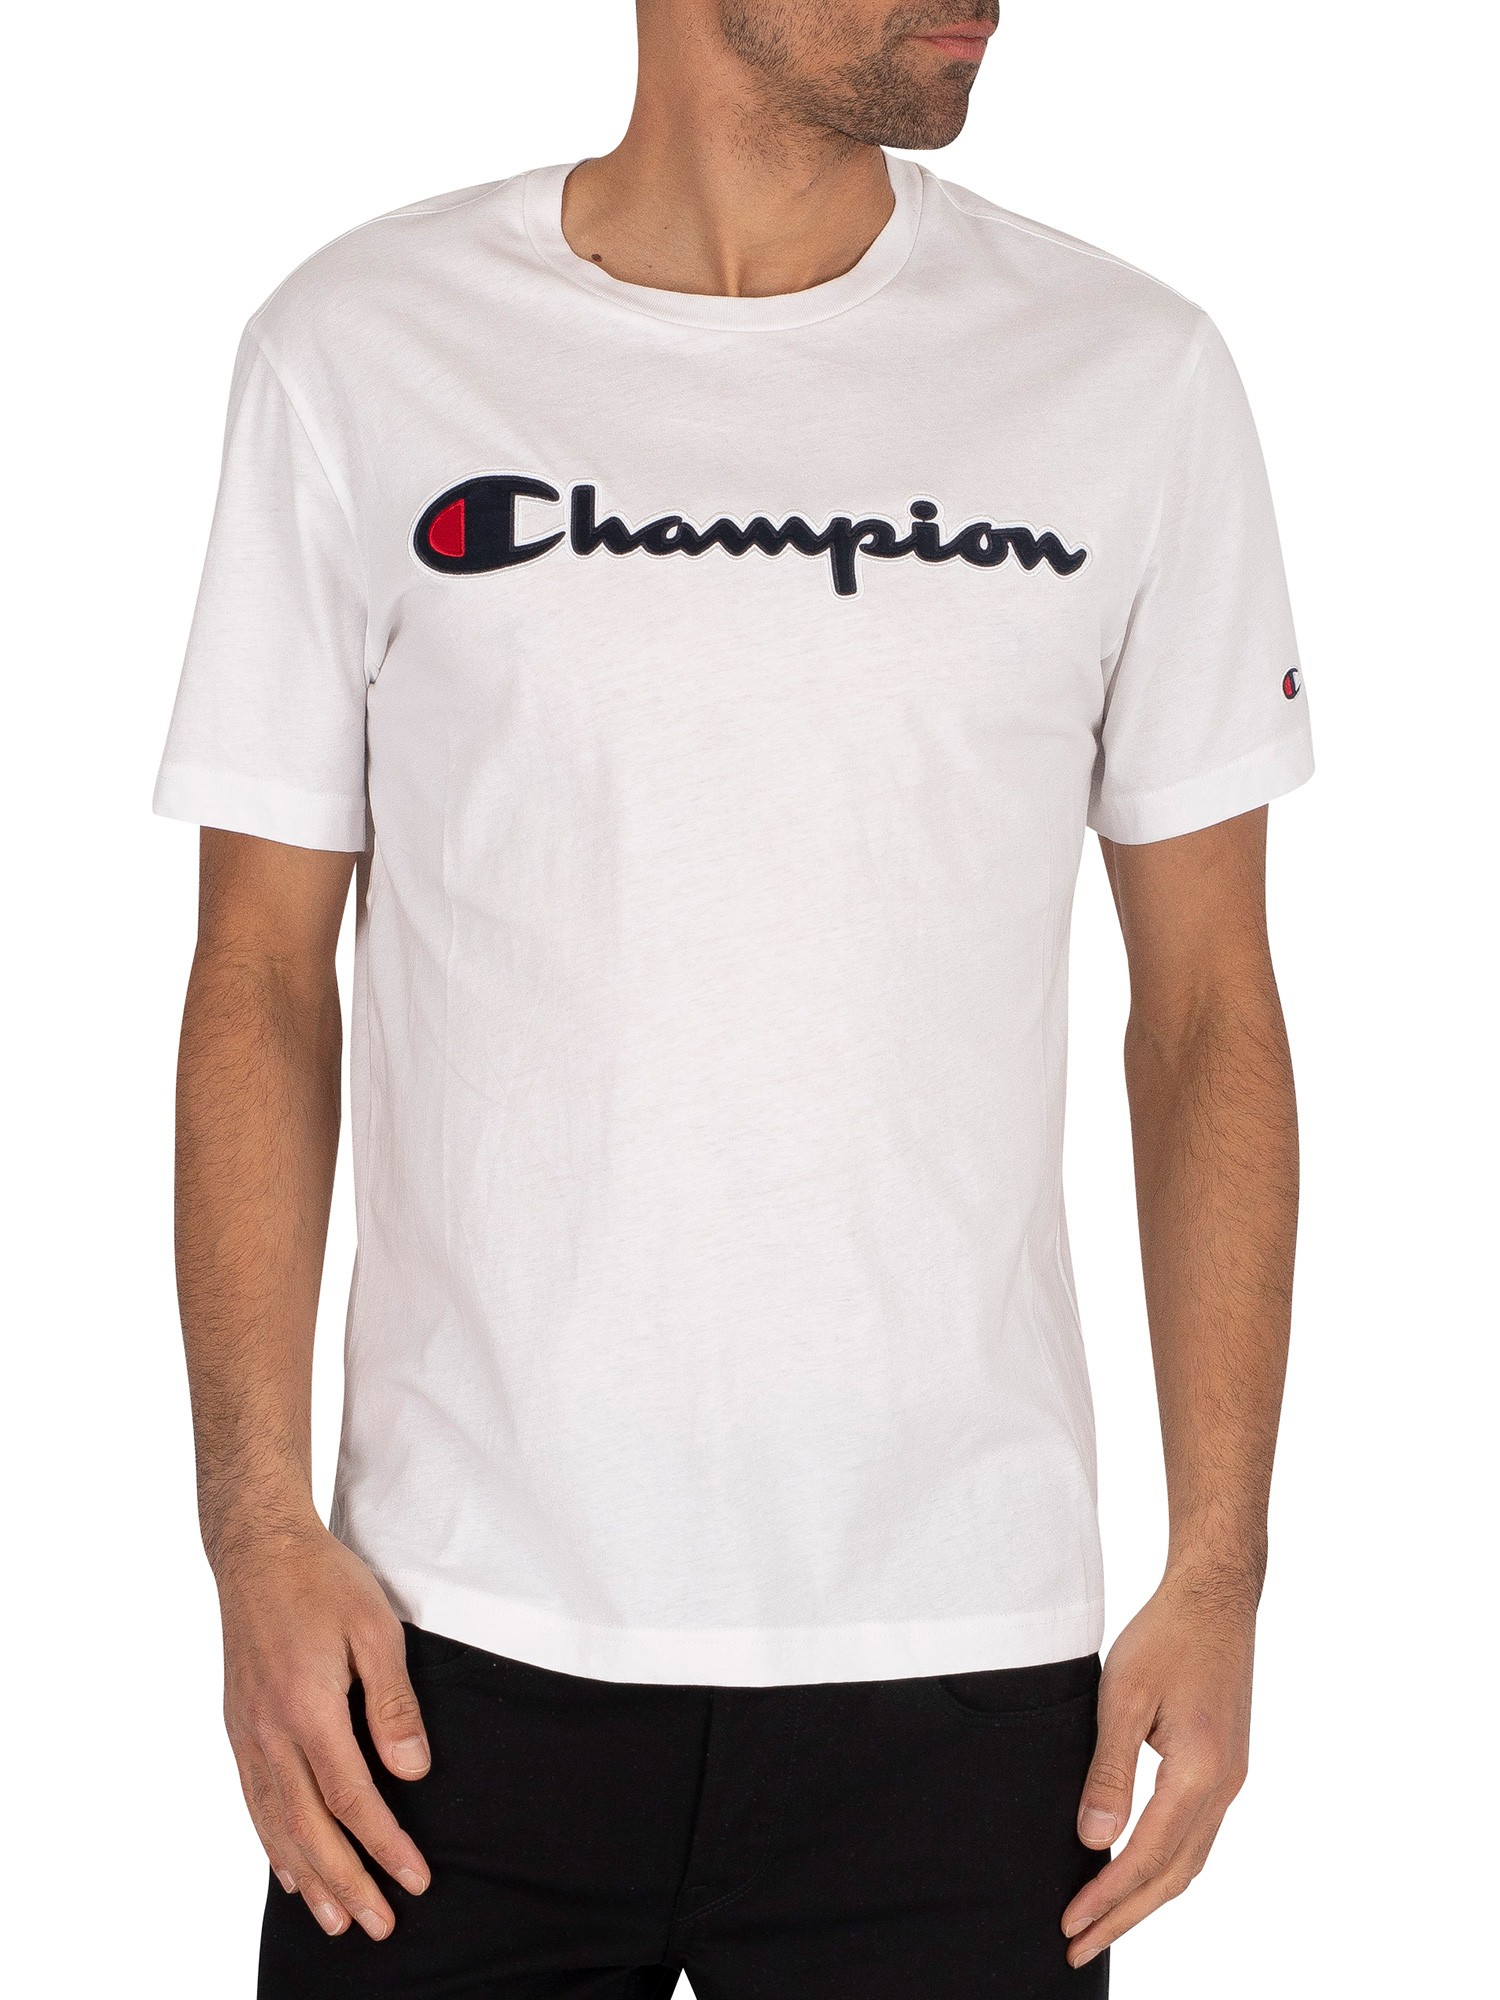 white champion tee